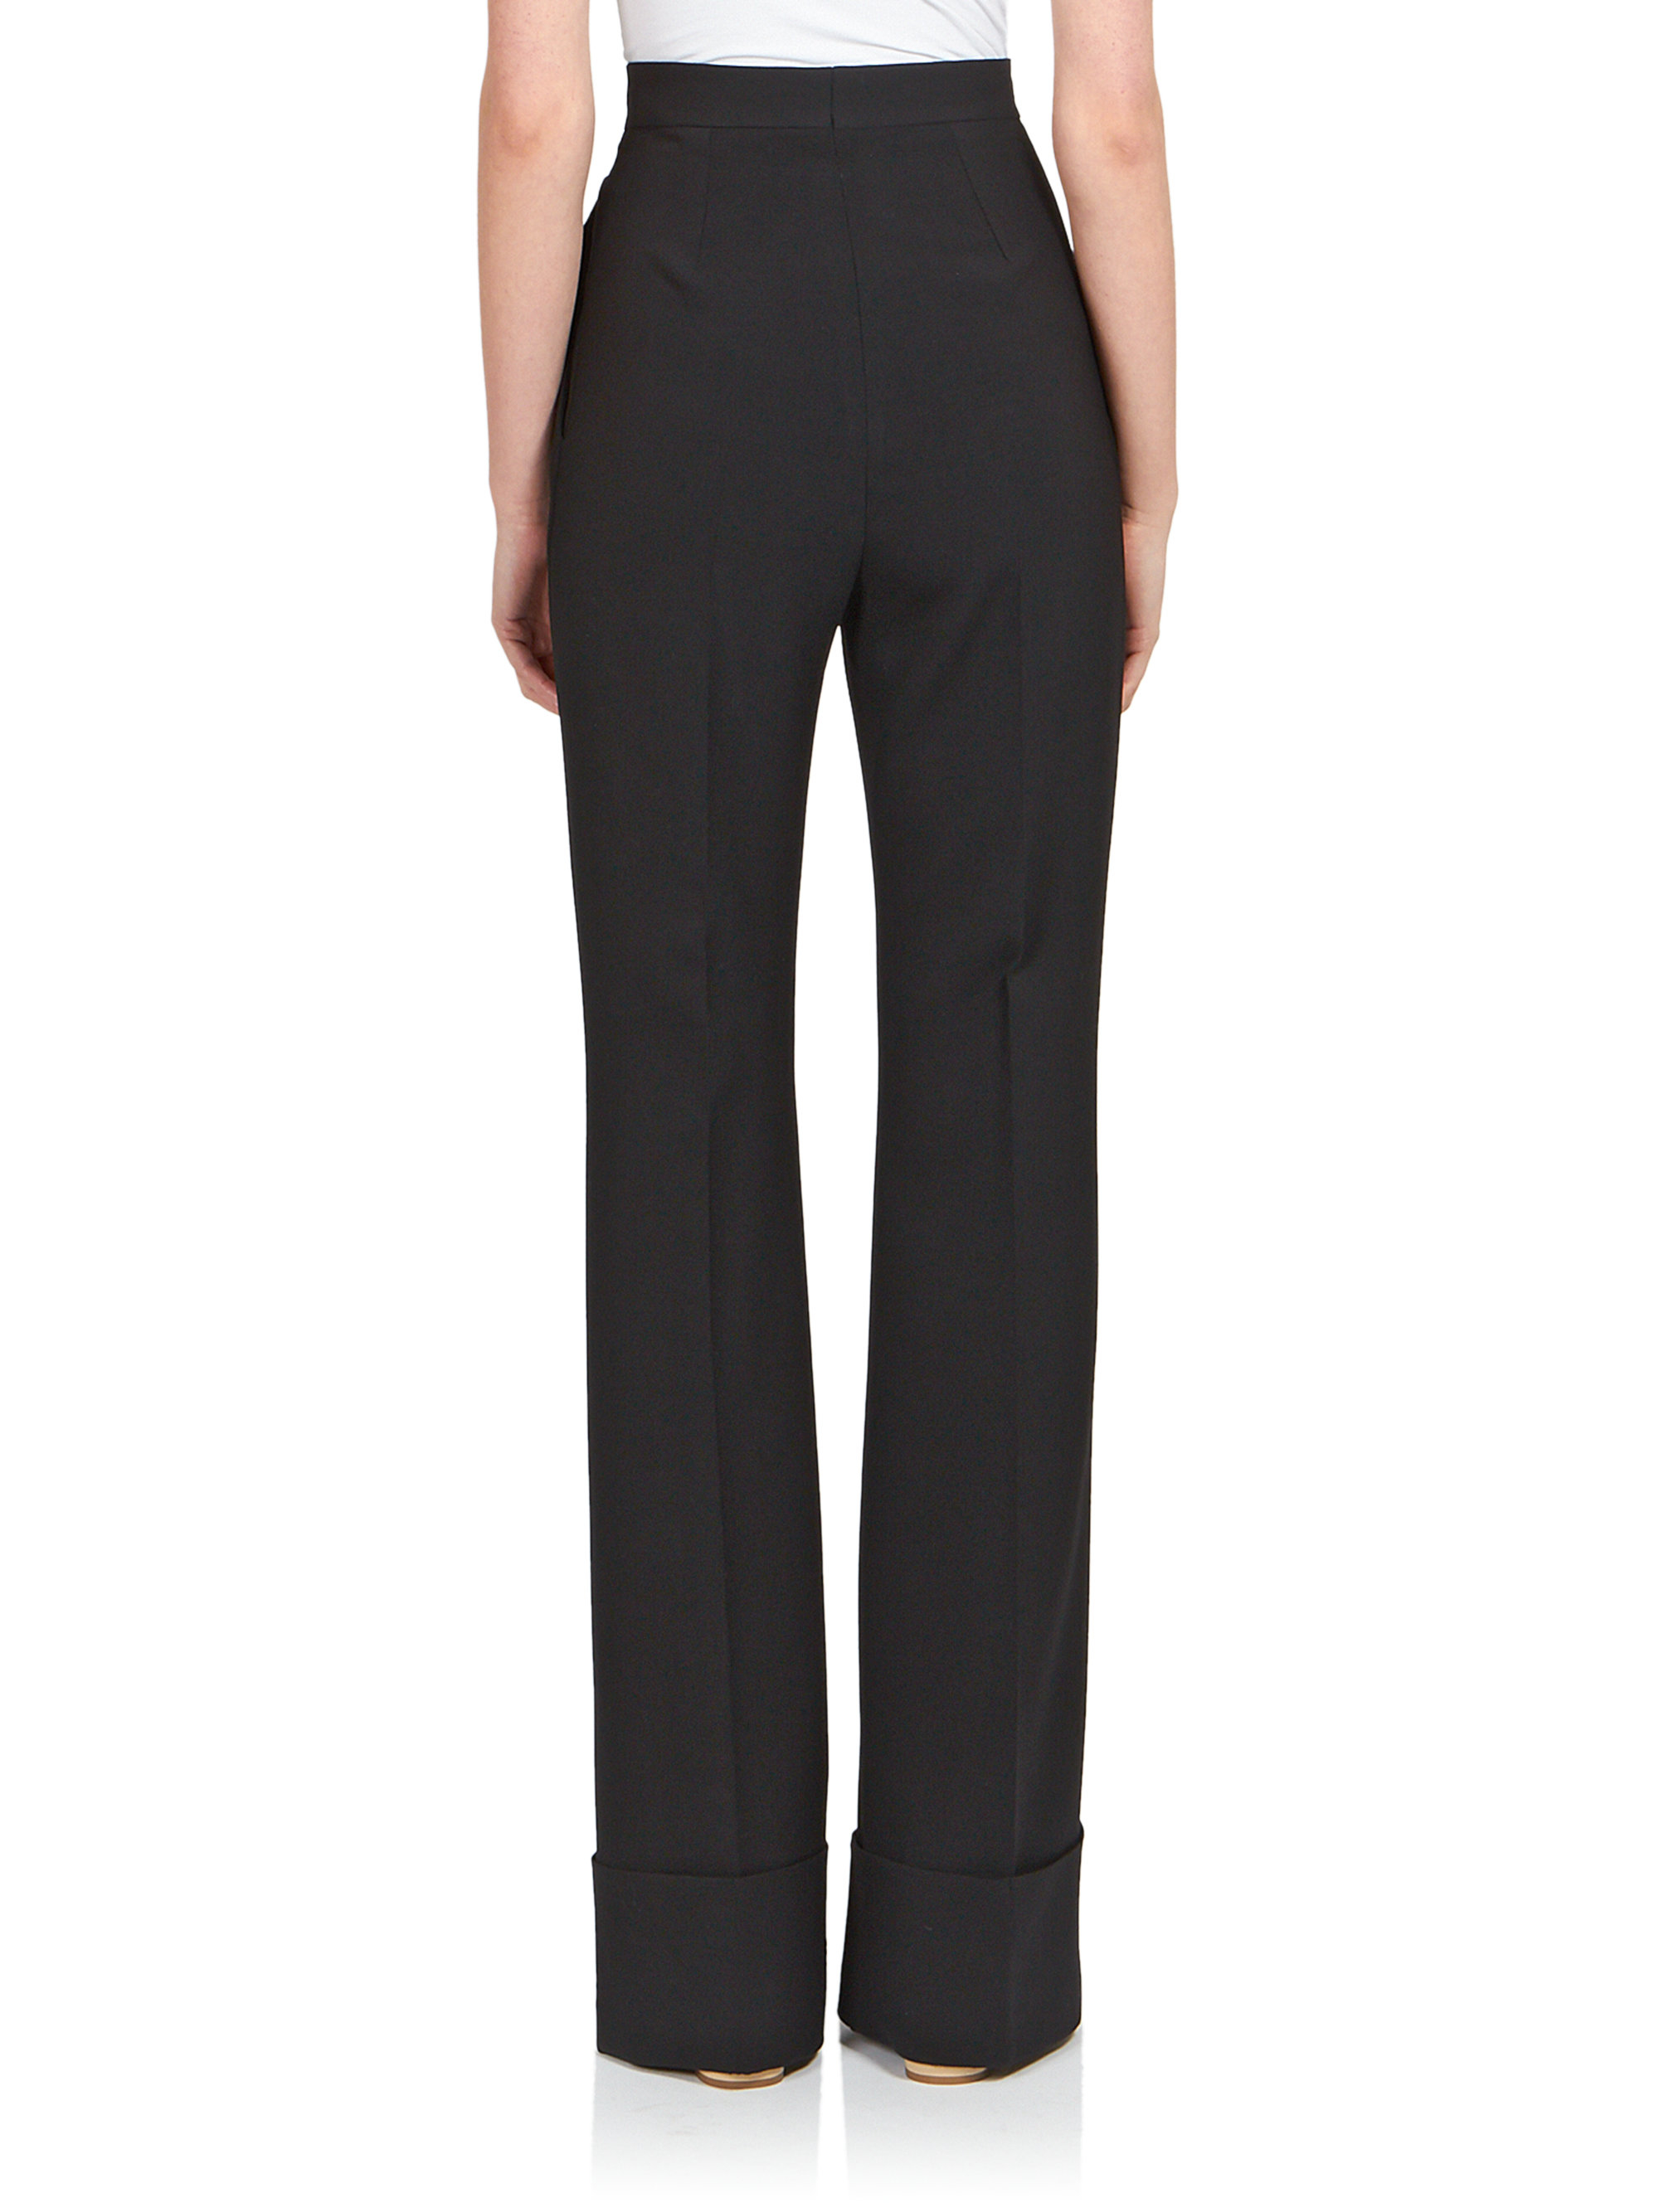 Lyst - Stella Mccartney Dakota High-waist Pants in Black